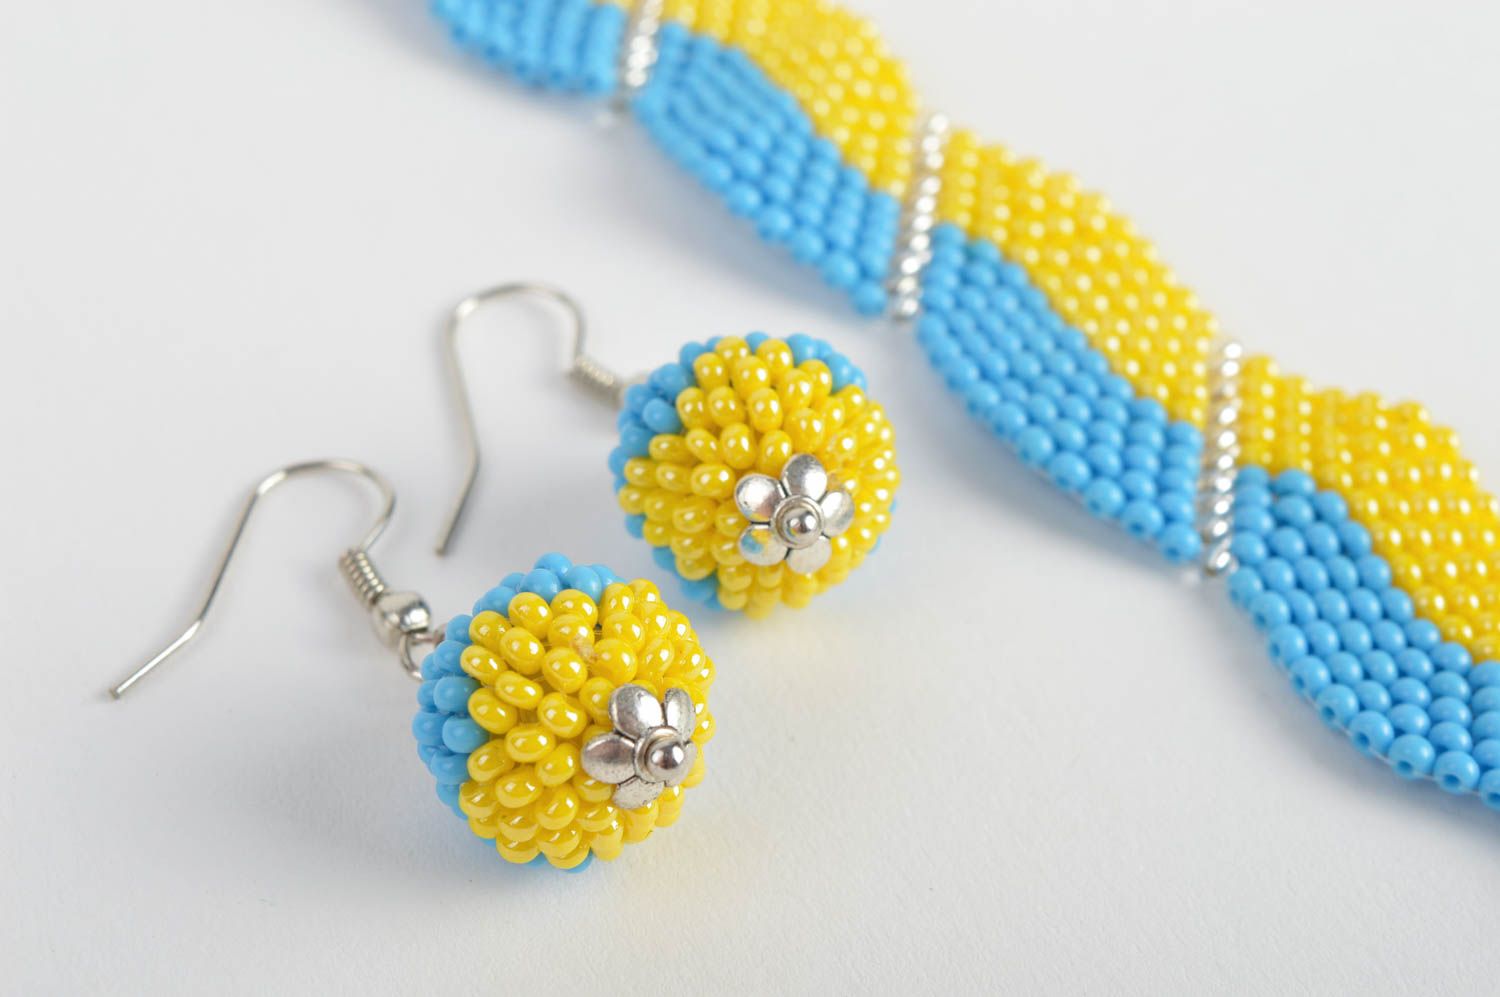 Handmade yellow and blue beaded jewelry set 2 items wrist bracelet and earrings photo 4